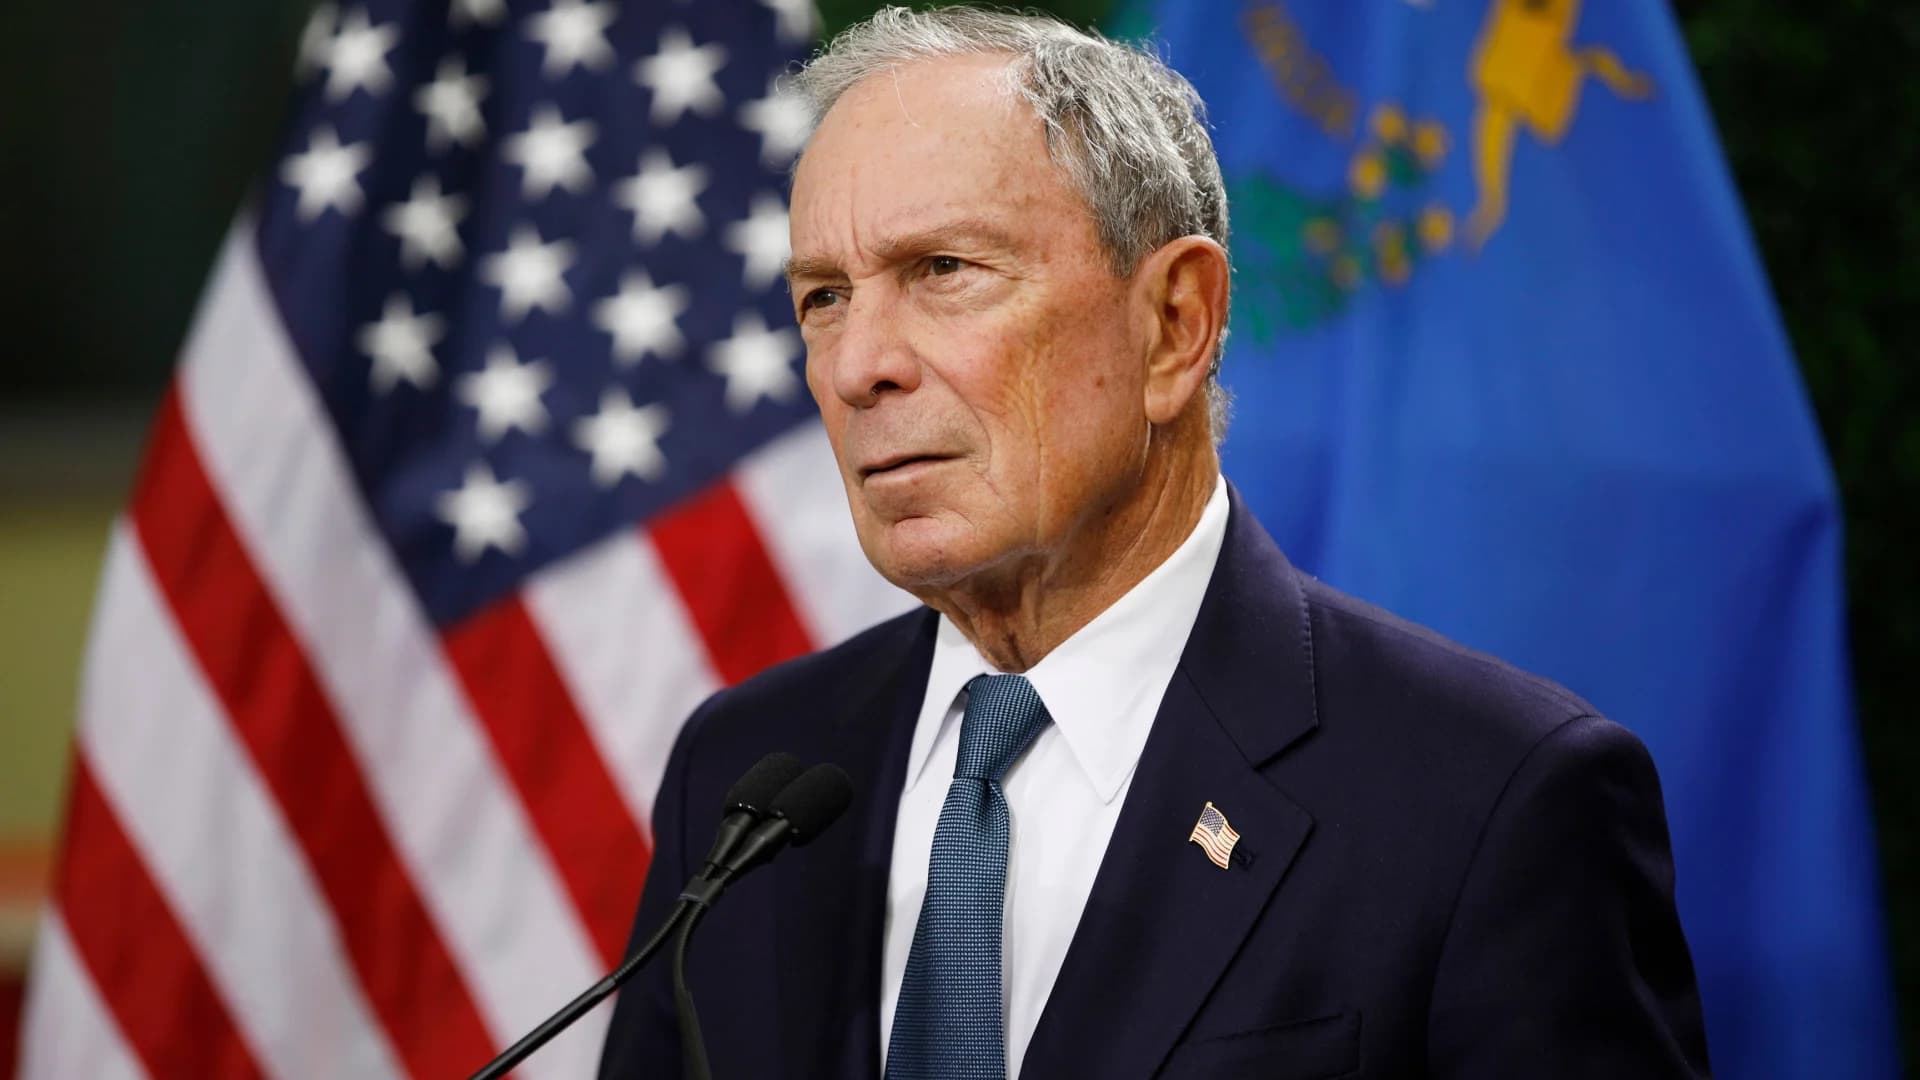 Former NYC Mayor Michael Bloomberg launches Democratic presidential bid